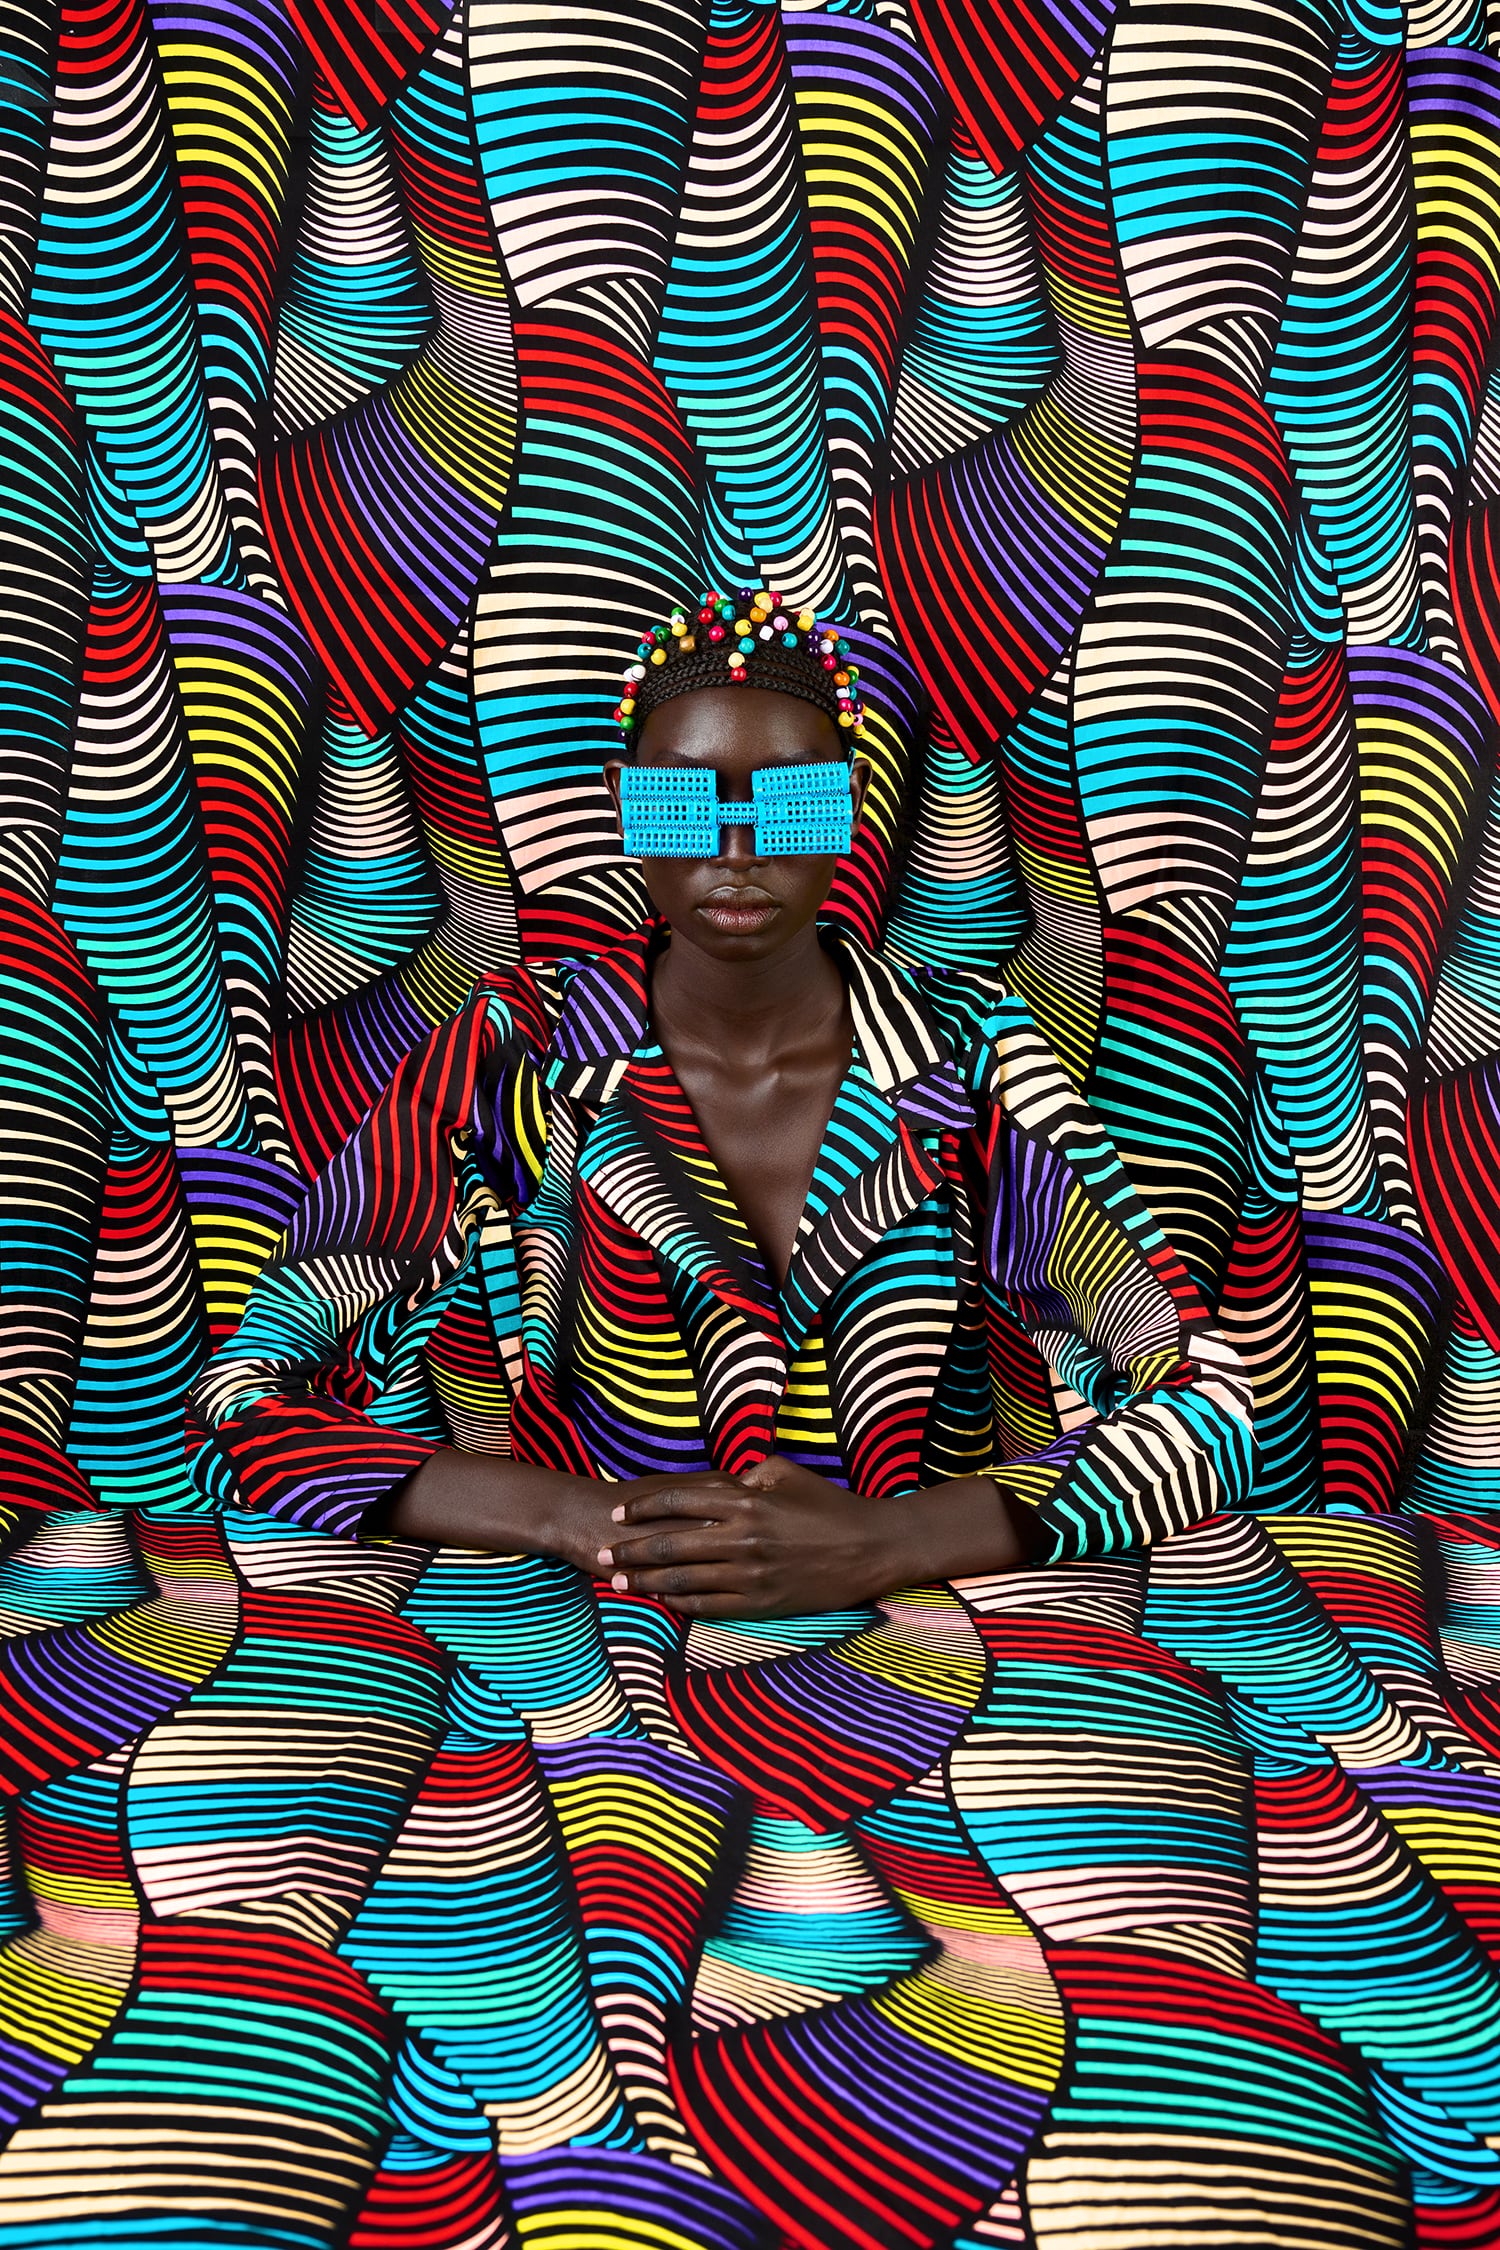 Vibrant Textiles and Repurposed Eyewear Camouflage on Thandiwe Muriu's Portraits